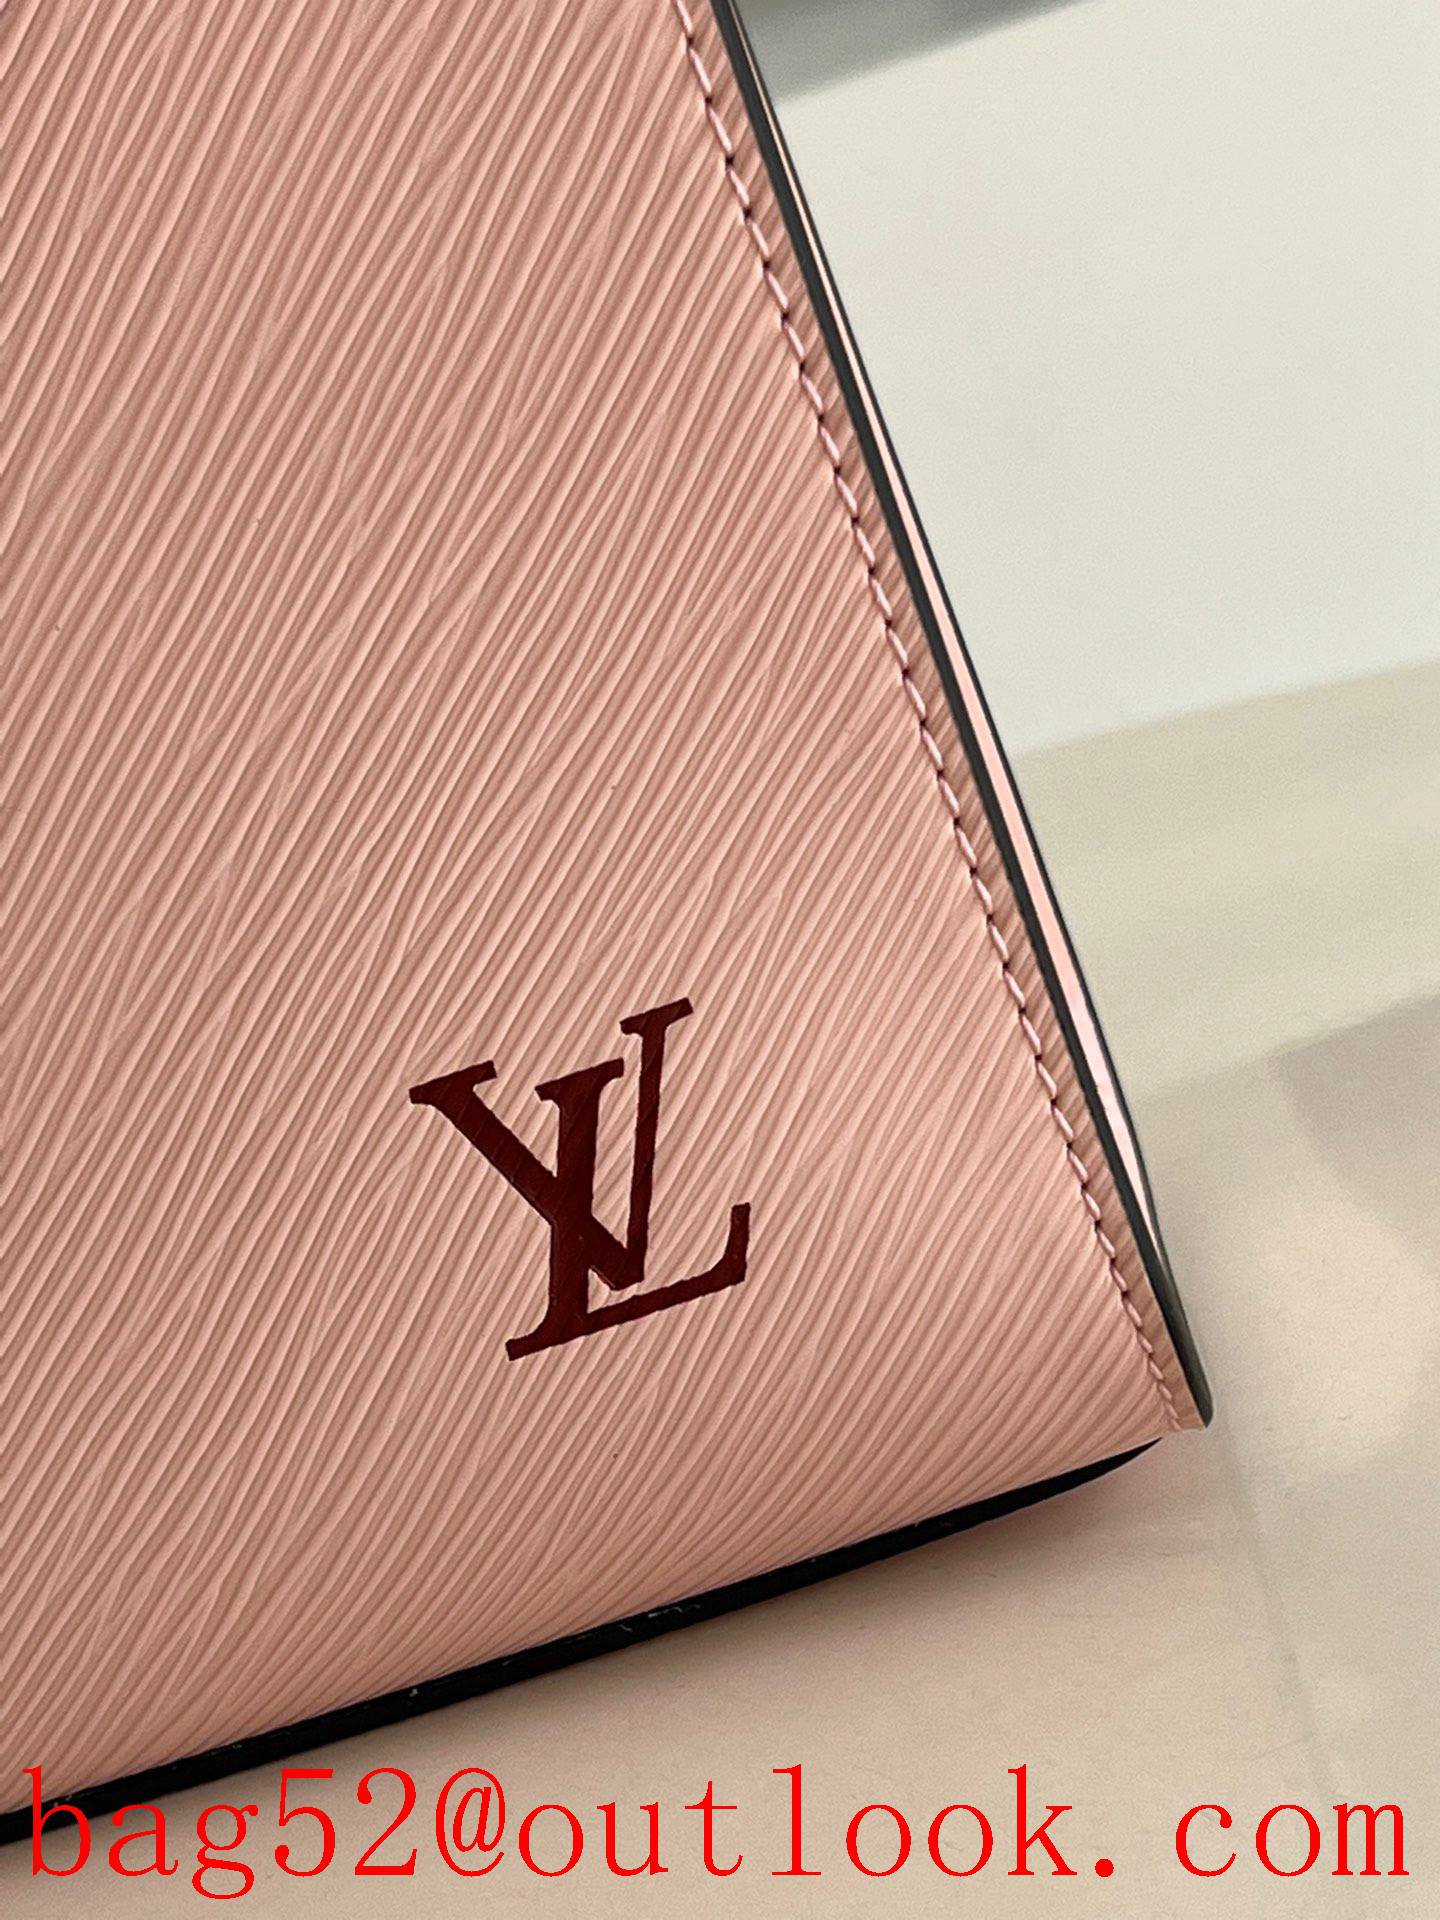 Louis Vuitton LV Epi Leather Sac Plat BB Tote Bag Handbag M58659 Pink